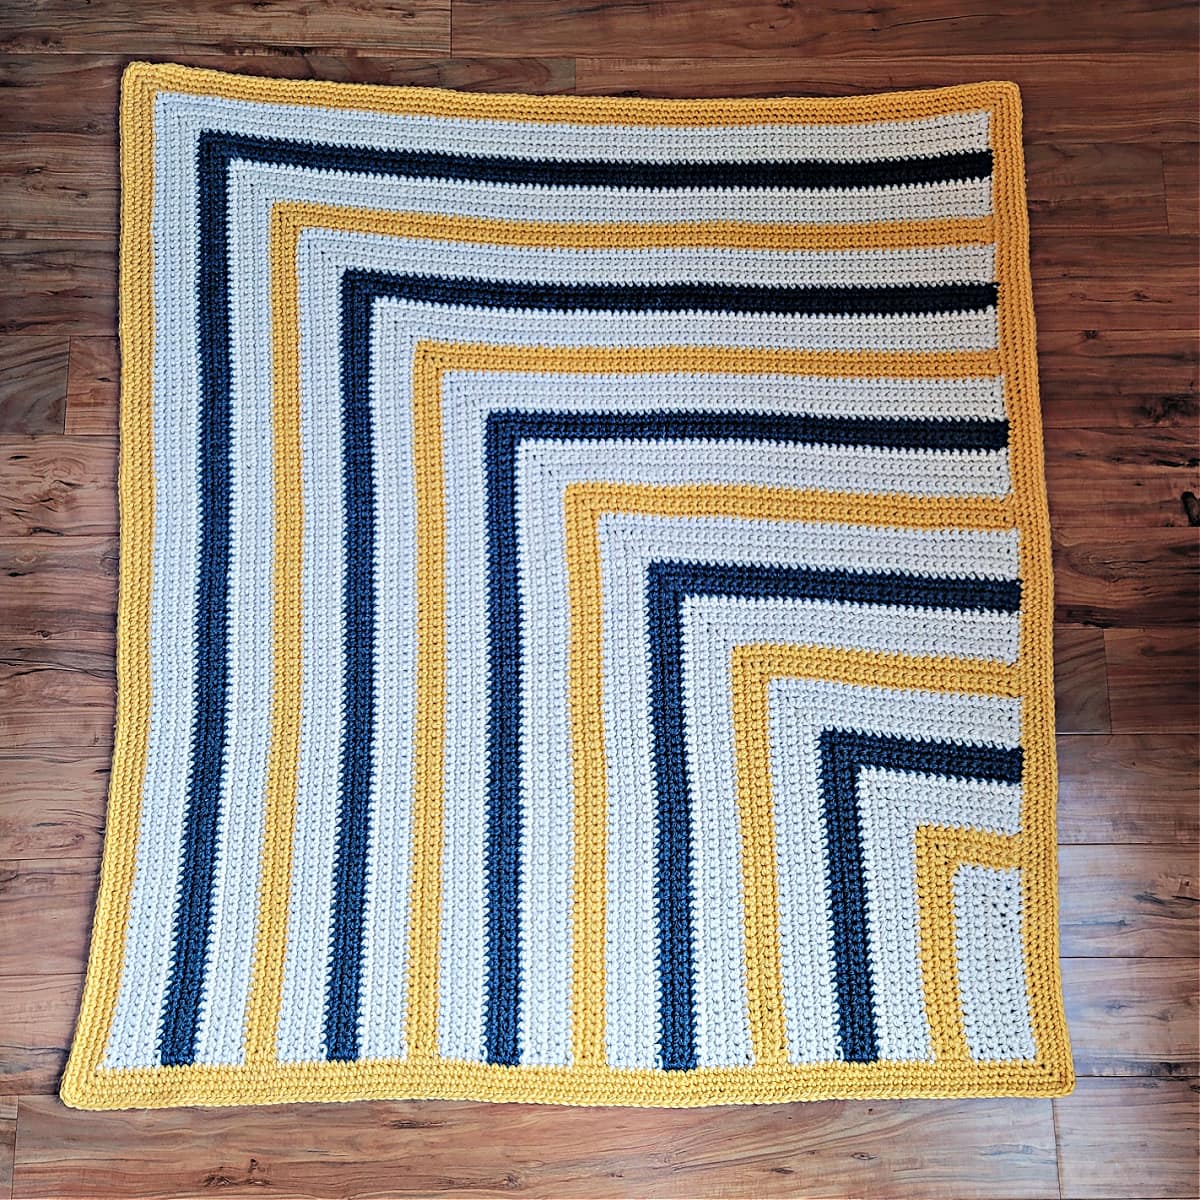 A chunky crochet blanket spread out on a wood floor.